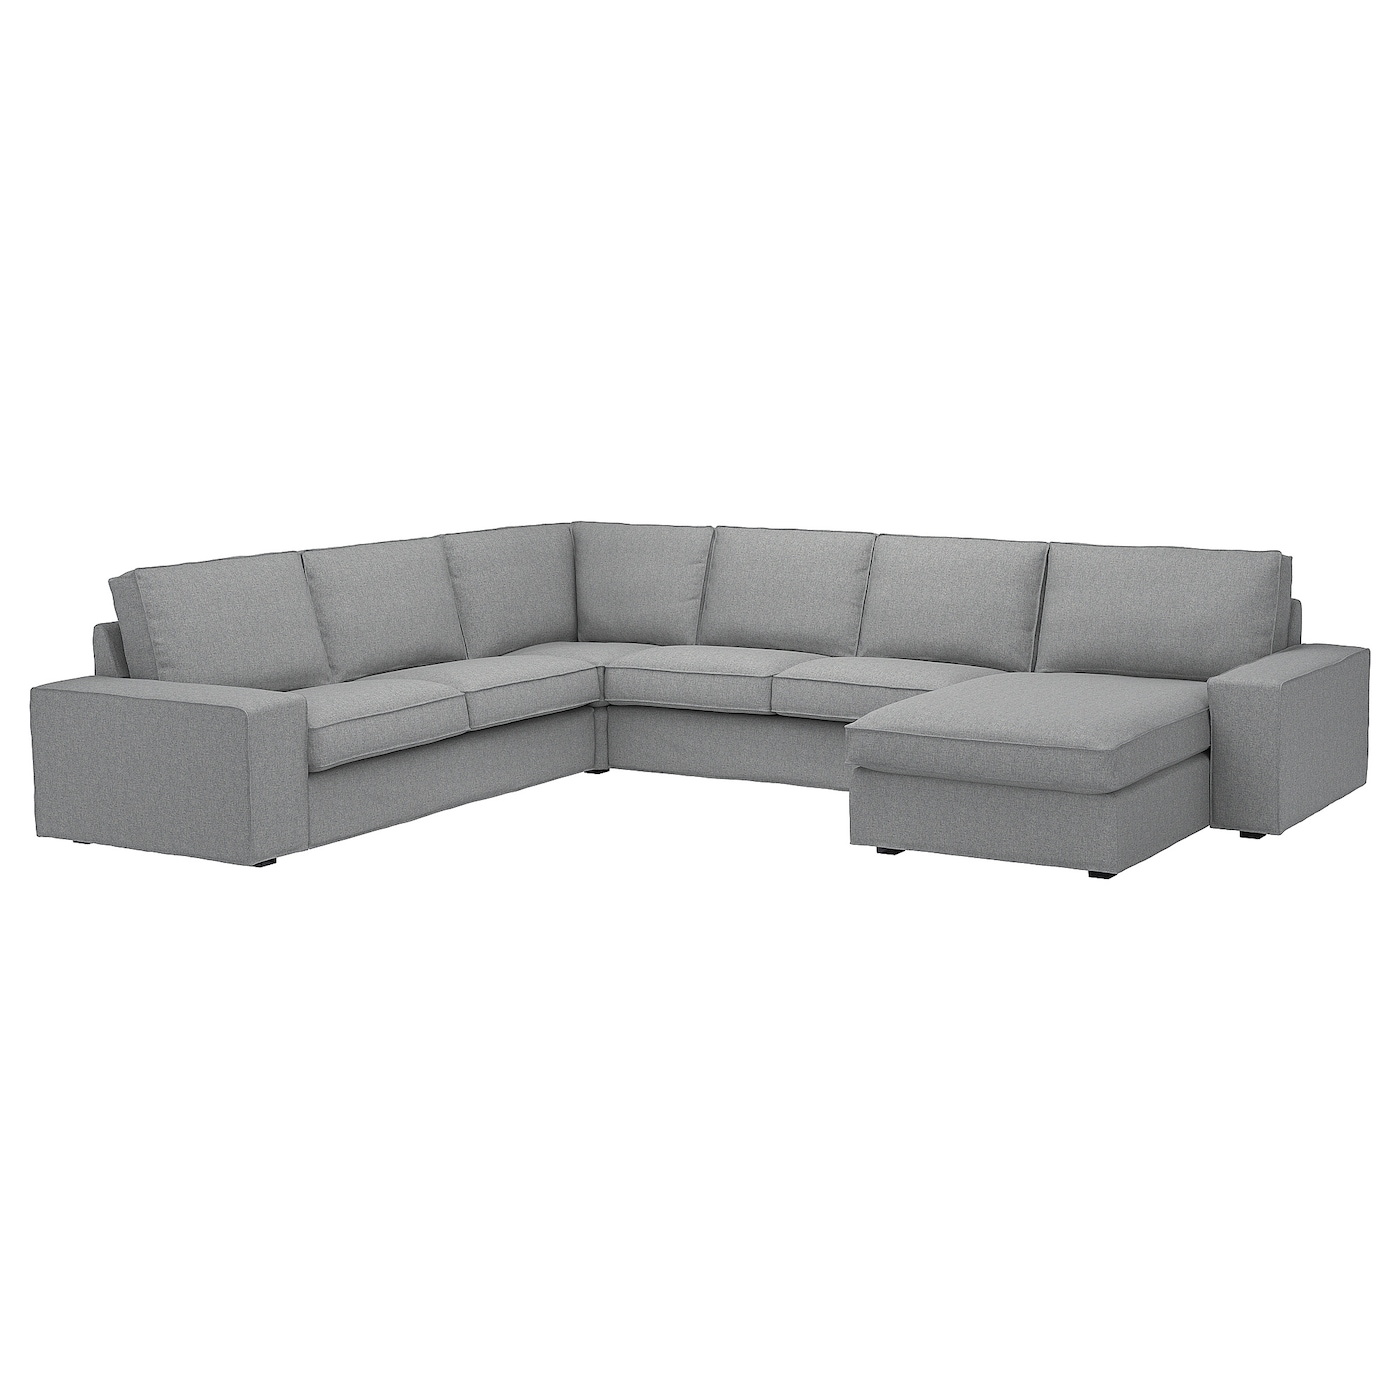 КИВИК Диван угловой, 5-местный. диван+диван, Тибблби бежевый/серый KIVIK IKEA